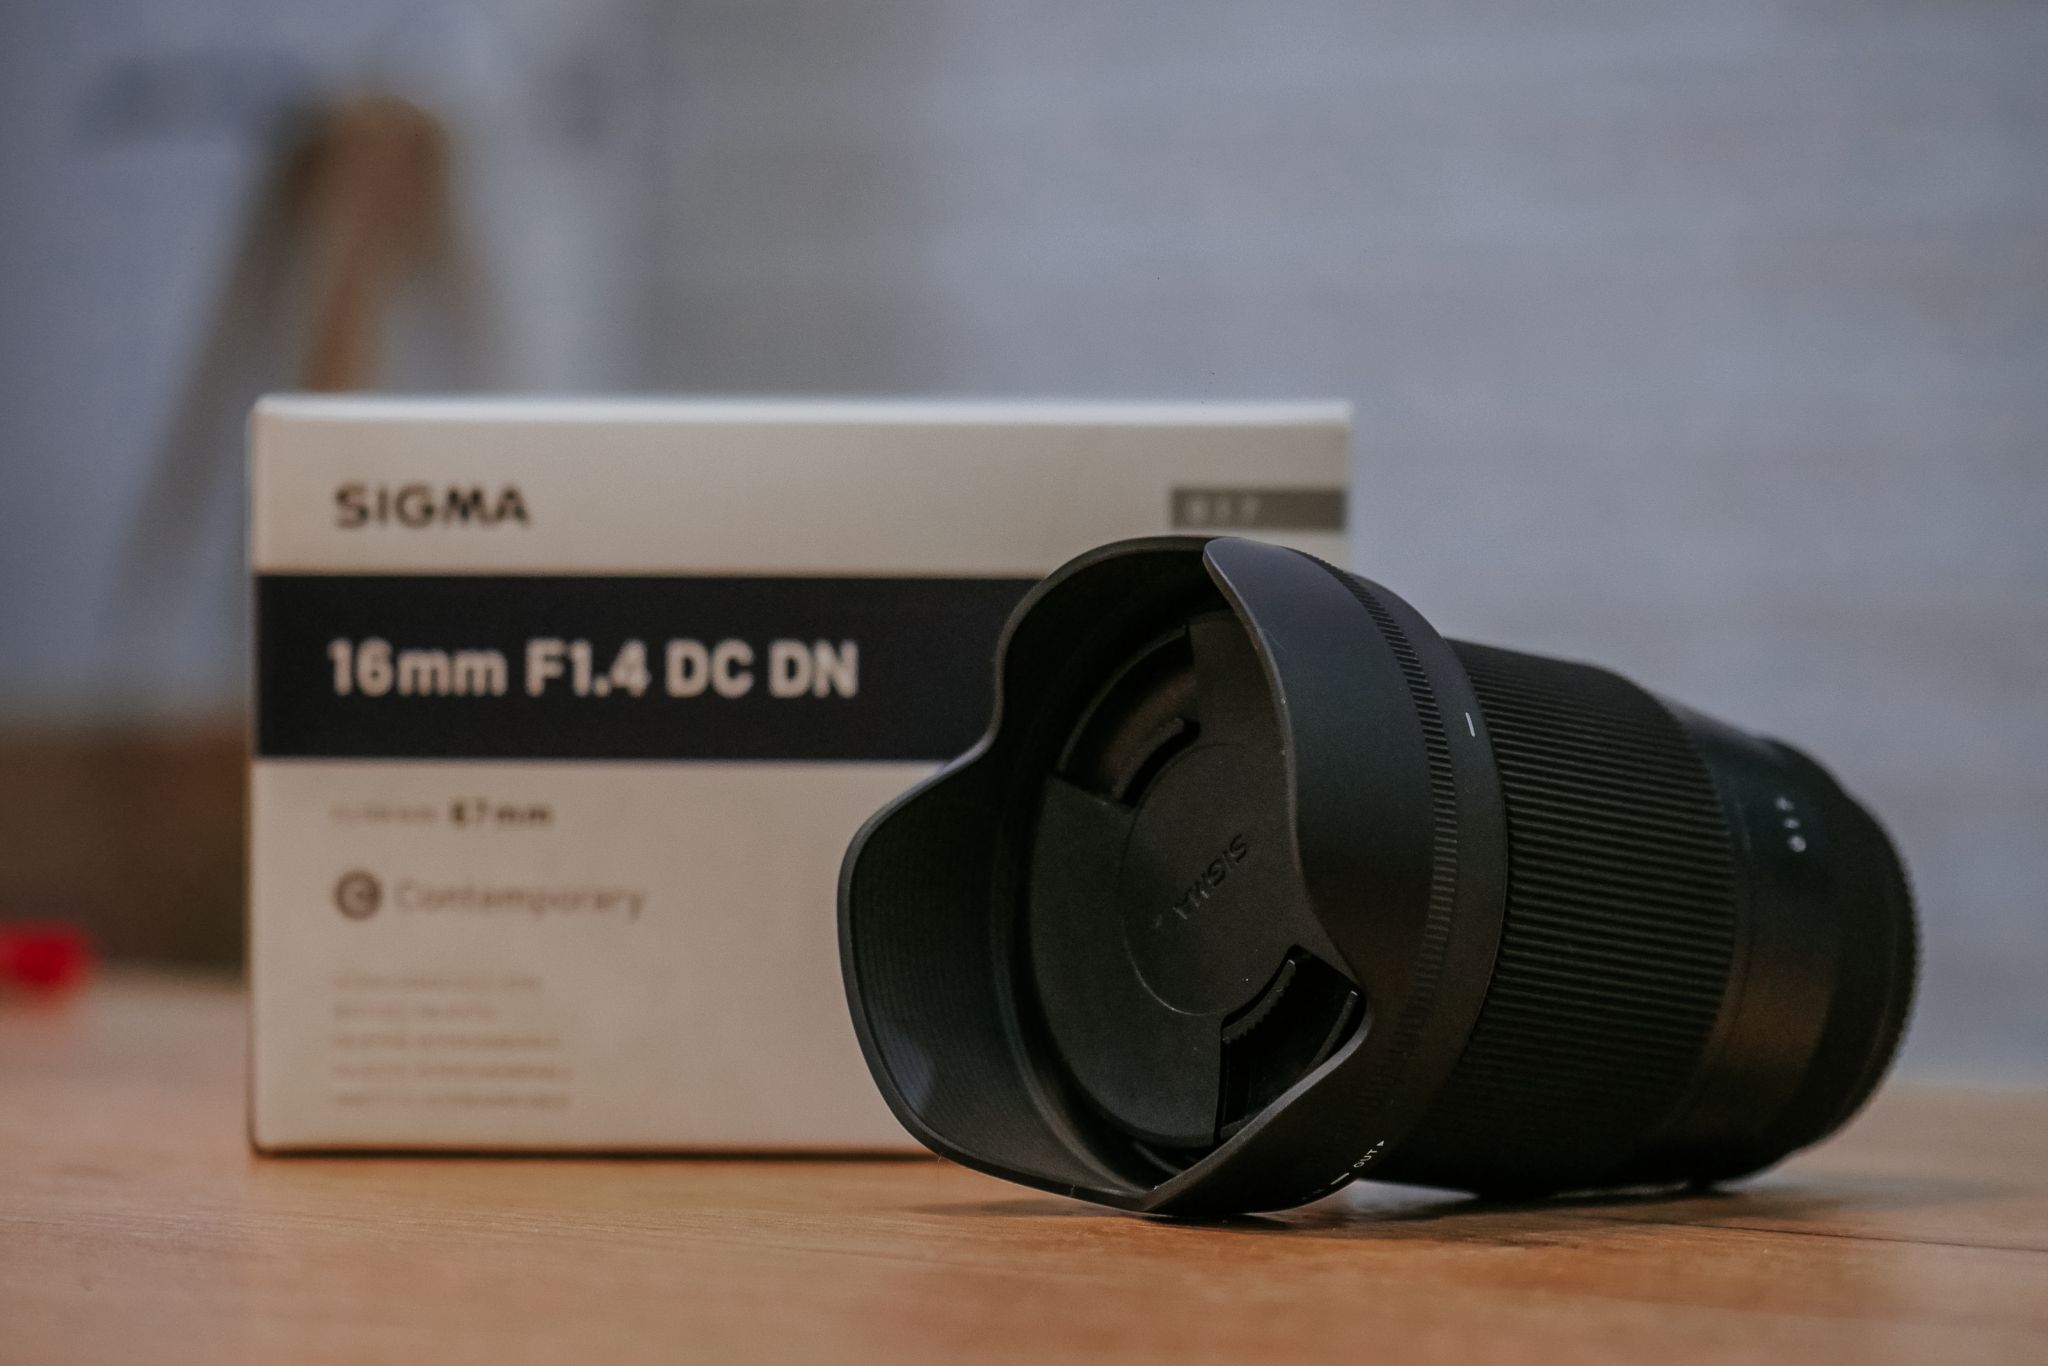 Sigma 16mm dc. Sigma 16mm f1.4 Sony e. Sigma 16mm f1.4 Sony. Sigma 16mm f/1.4 DC DN. Sigma 16mm f1.4 DC DN Contemporary Sony e.